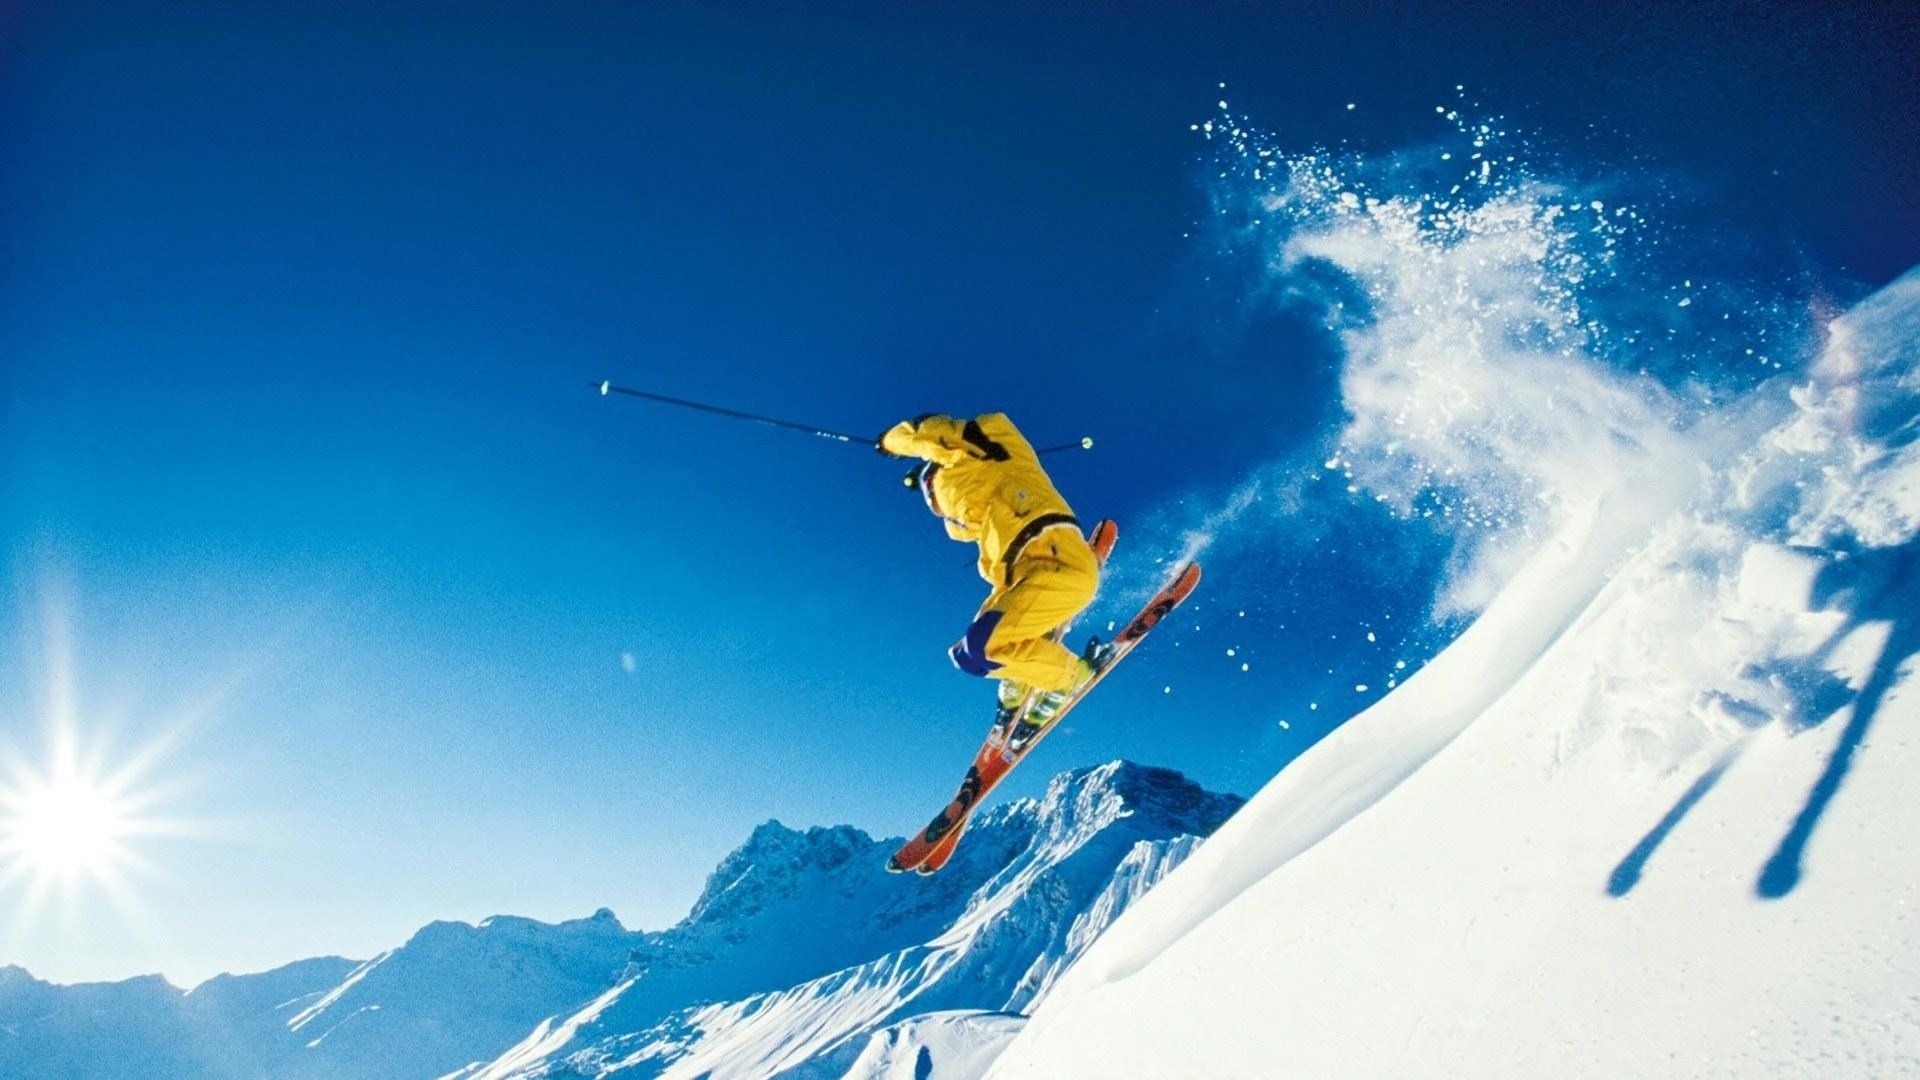 Trick skiing wallpapers, Impressive stunts, Extreme winter maneuvers, Adrenaline rush, 1920x1080 Full HD Desktop